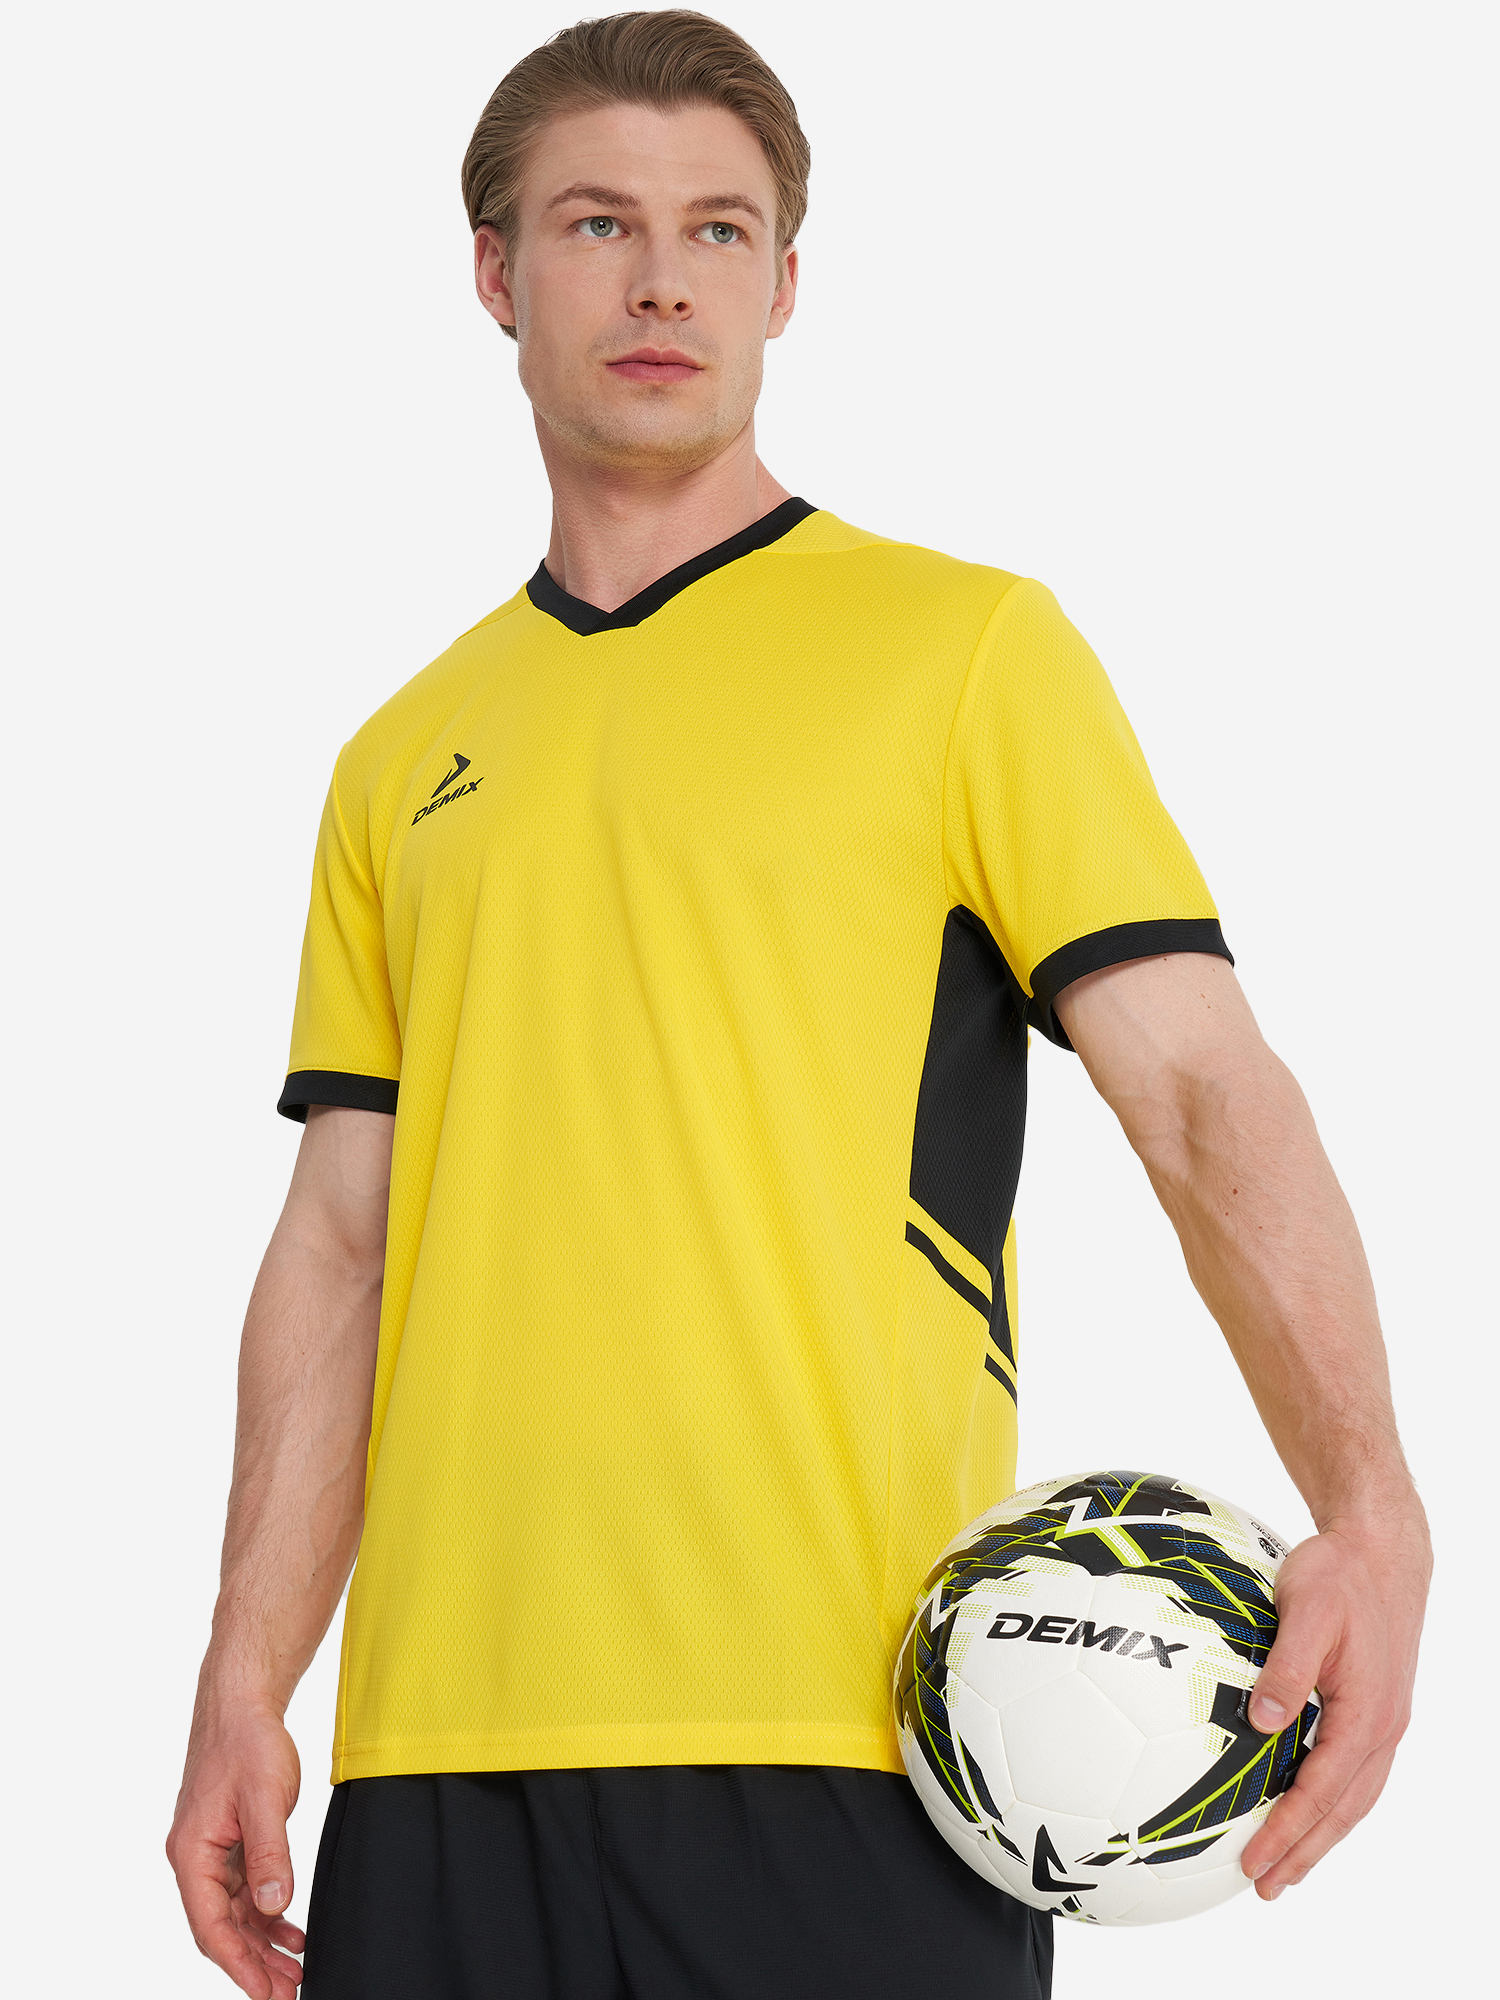 Футболка мужская Demix Pace, Желтый